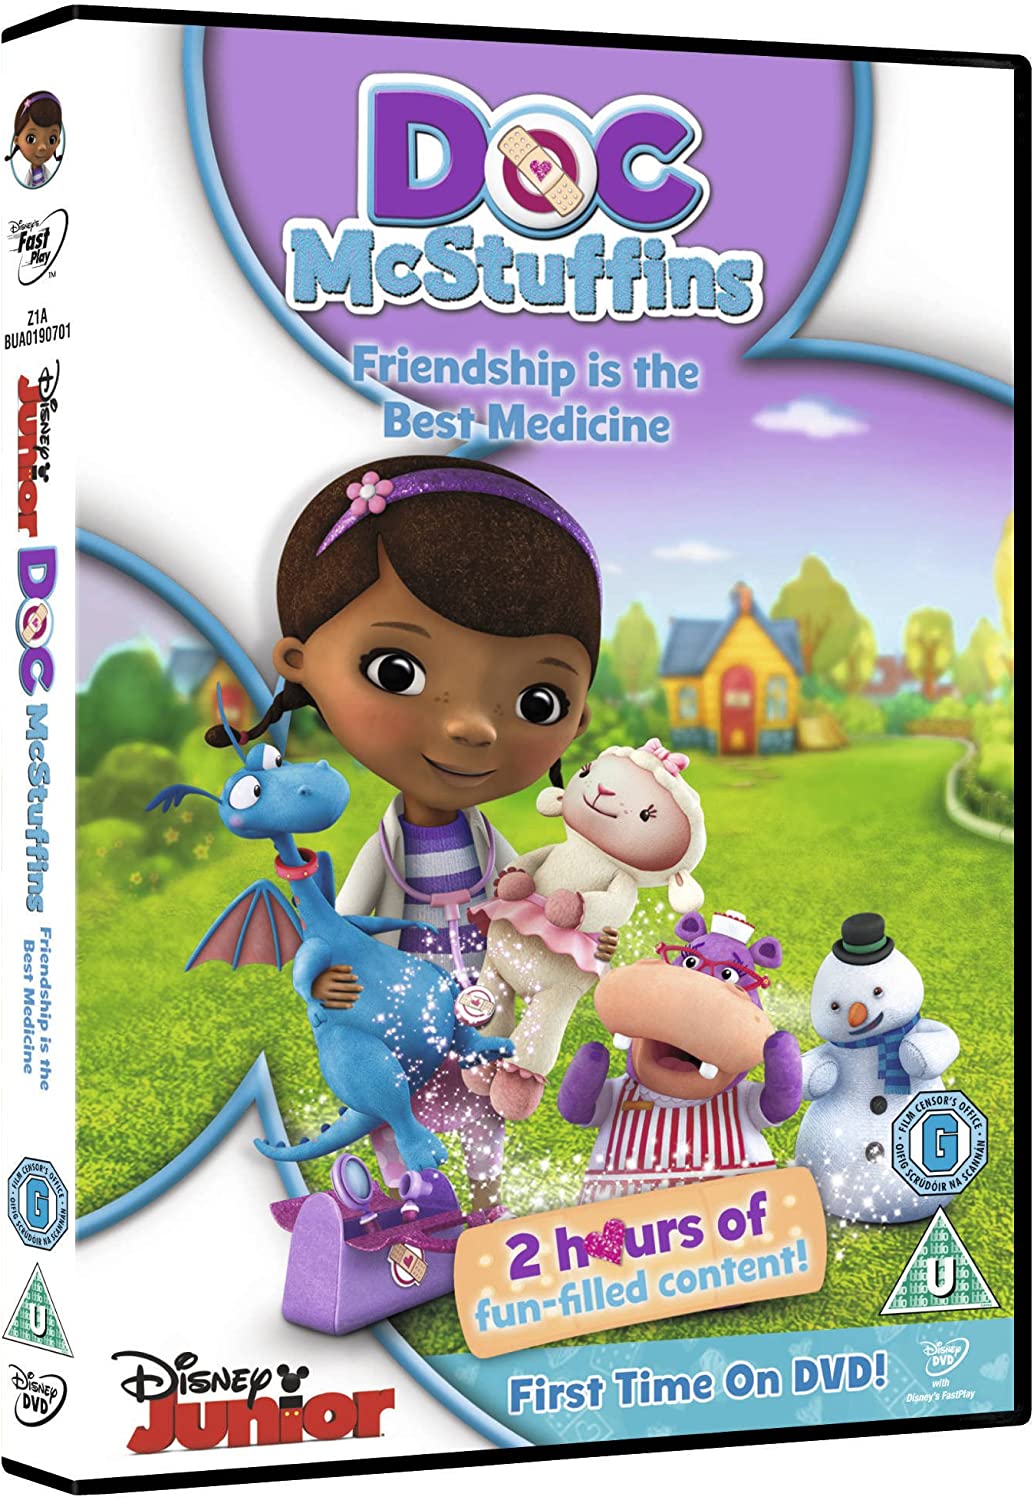 Doc McStuffins: Friendship - Children's television series - Anumation [DVD]